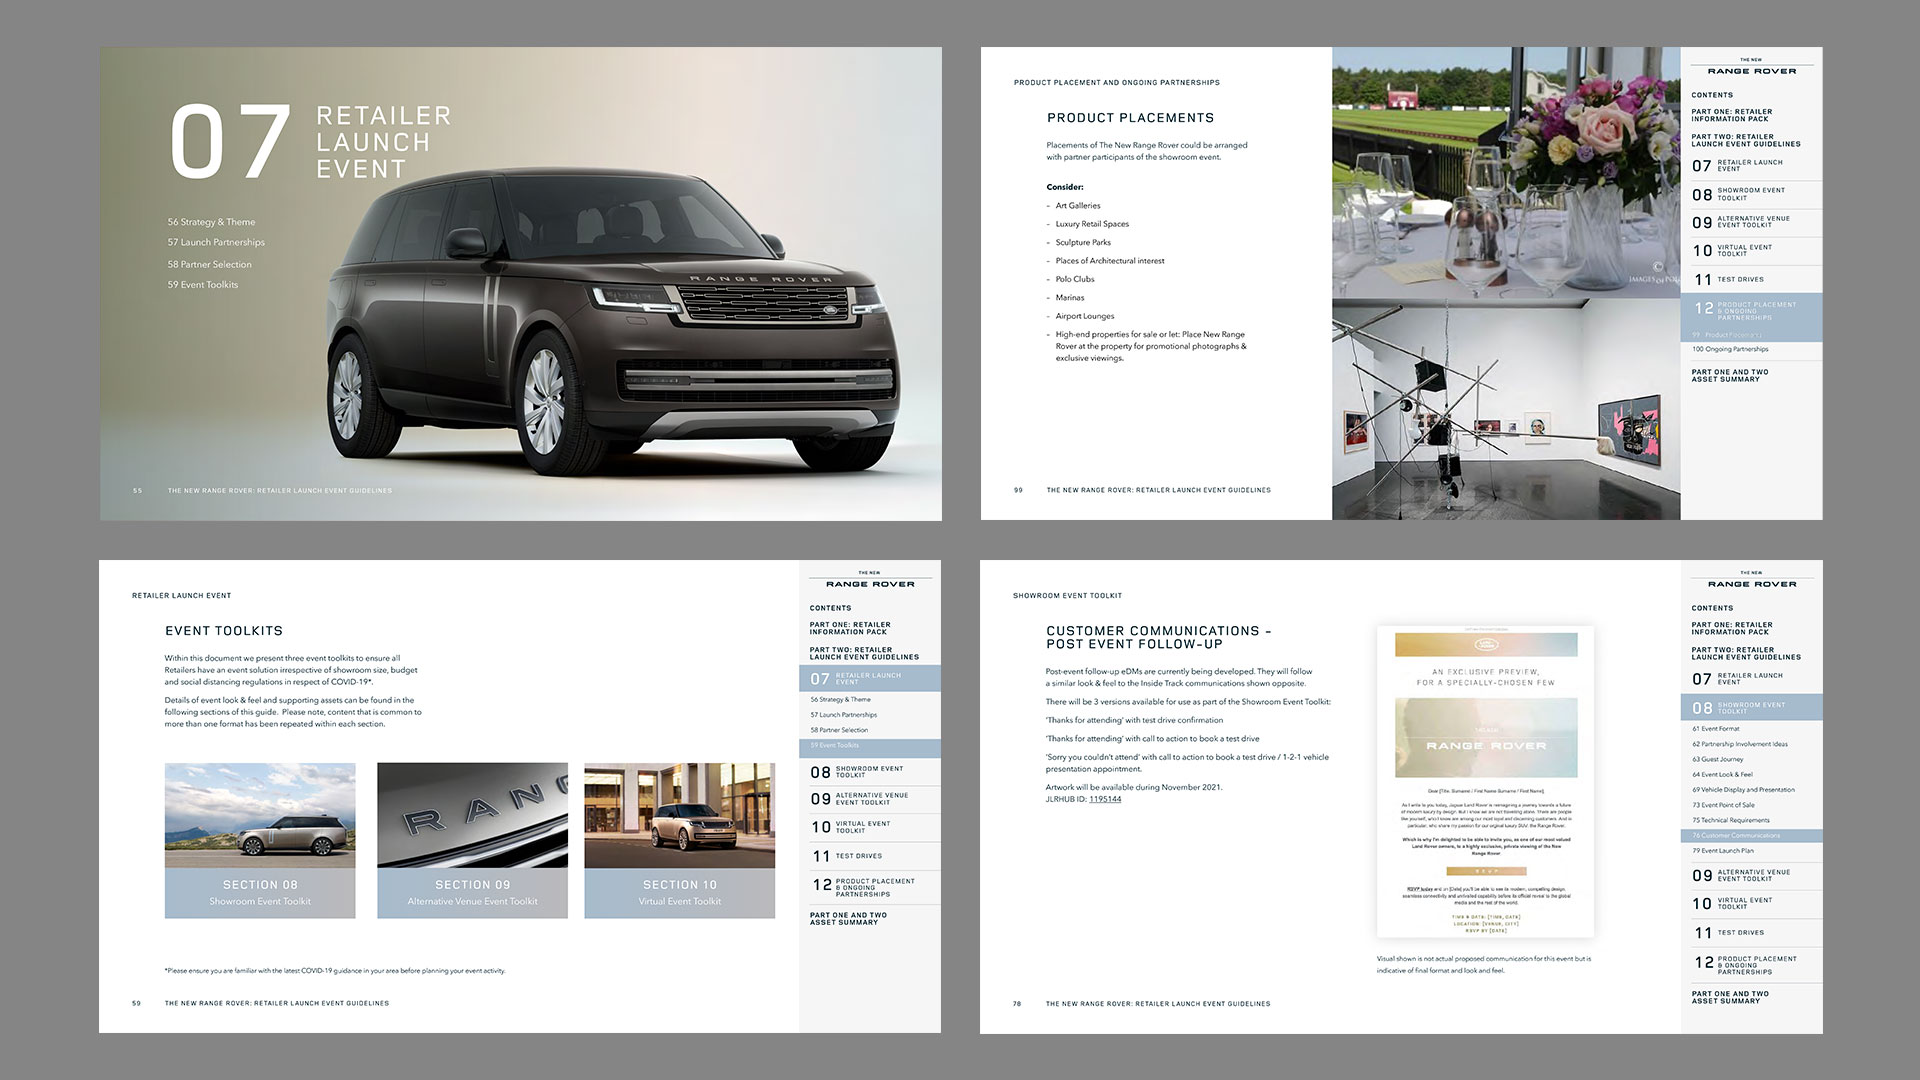 JLR - New Range Rover global launch retailer info & event guidelines